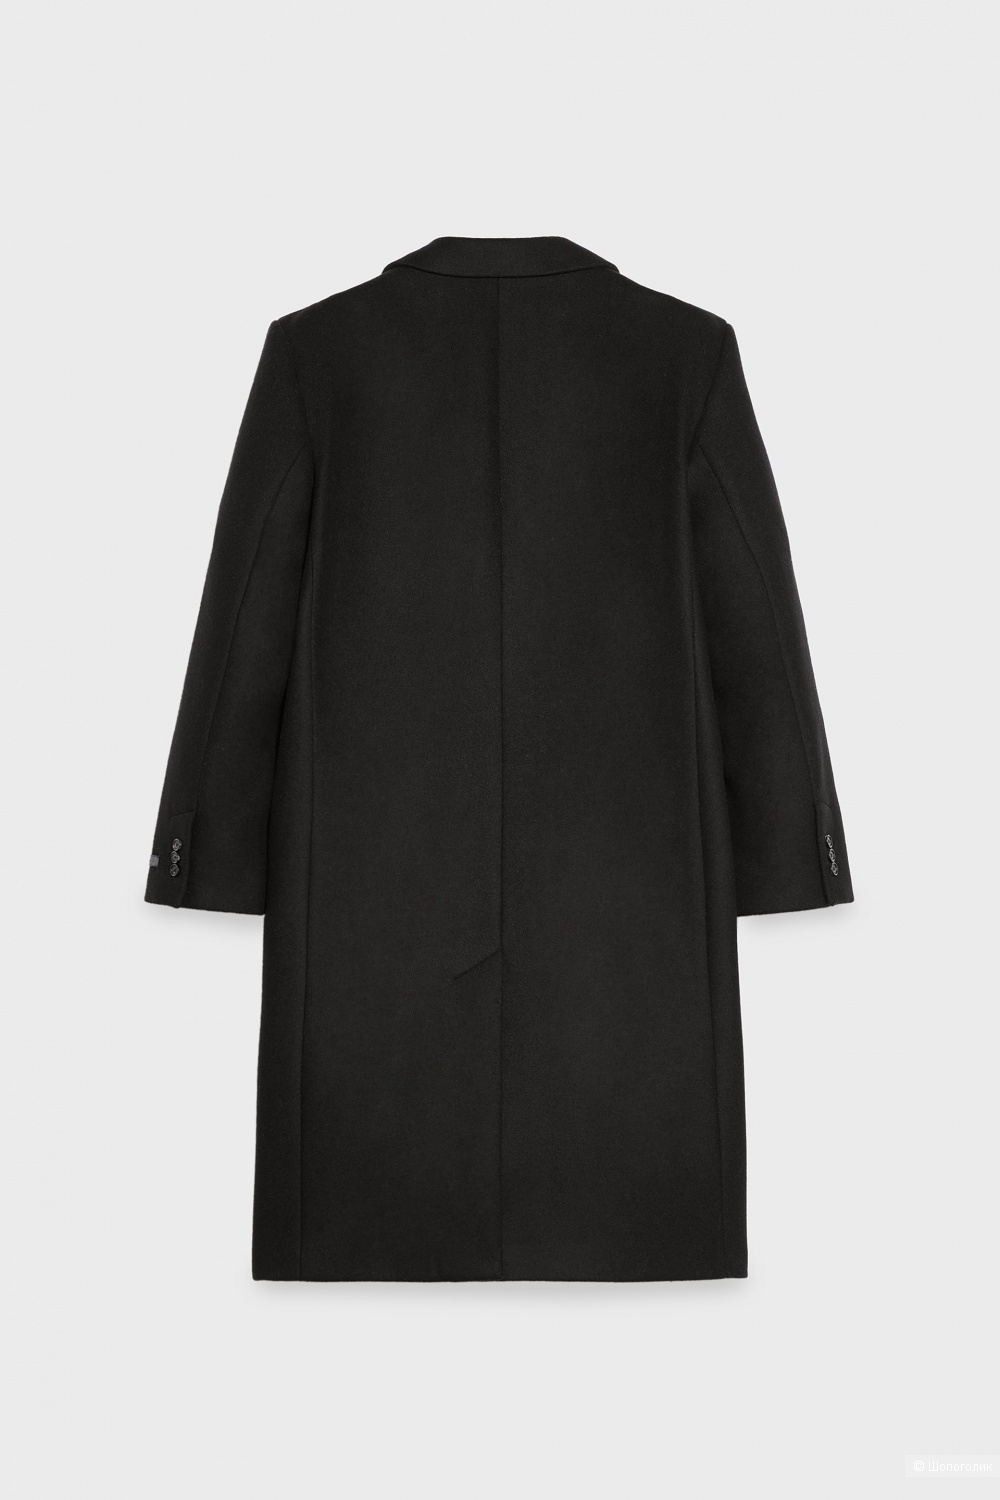 Пальто Steven Meisel x Zara, размер  XS/S/M